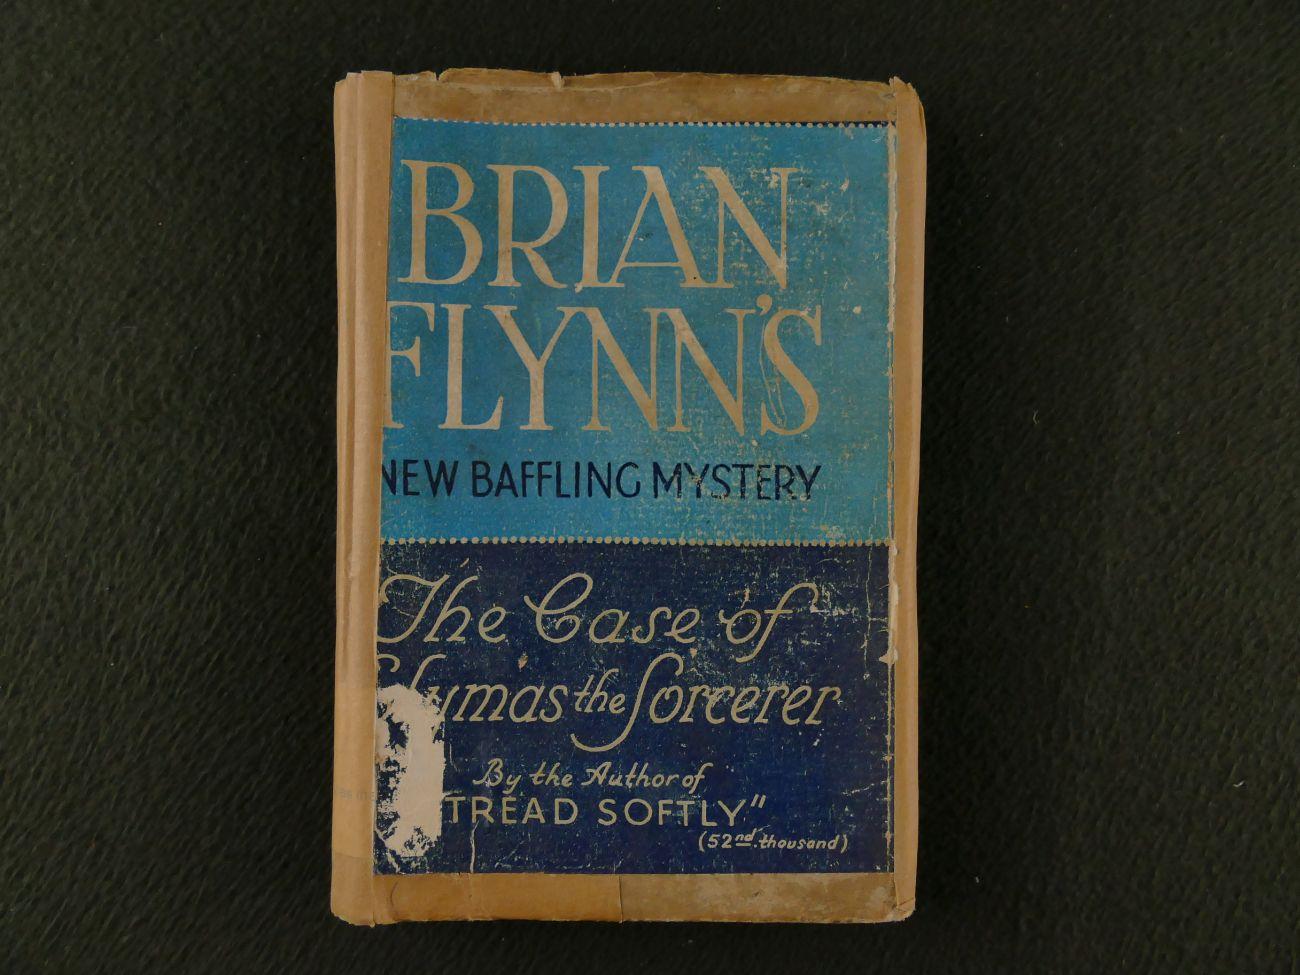 Flynn, Brian - The case of Elymas the sorcerer (6 foto's)